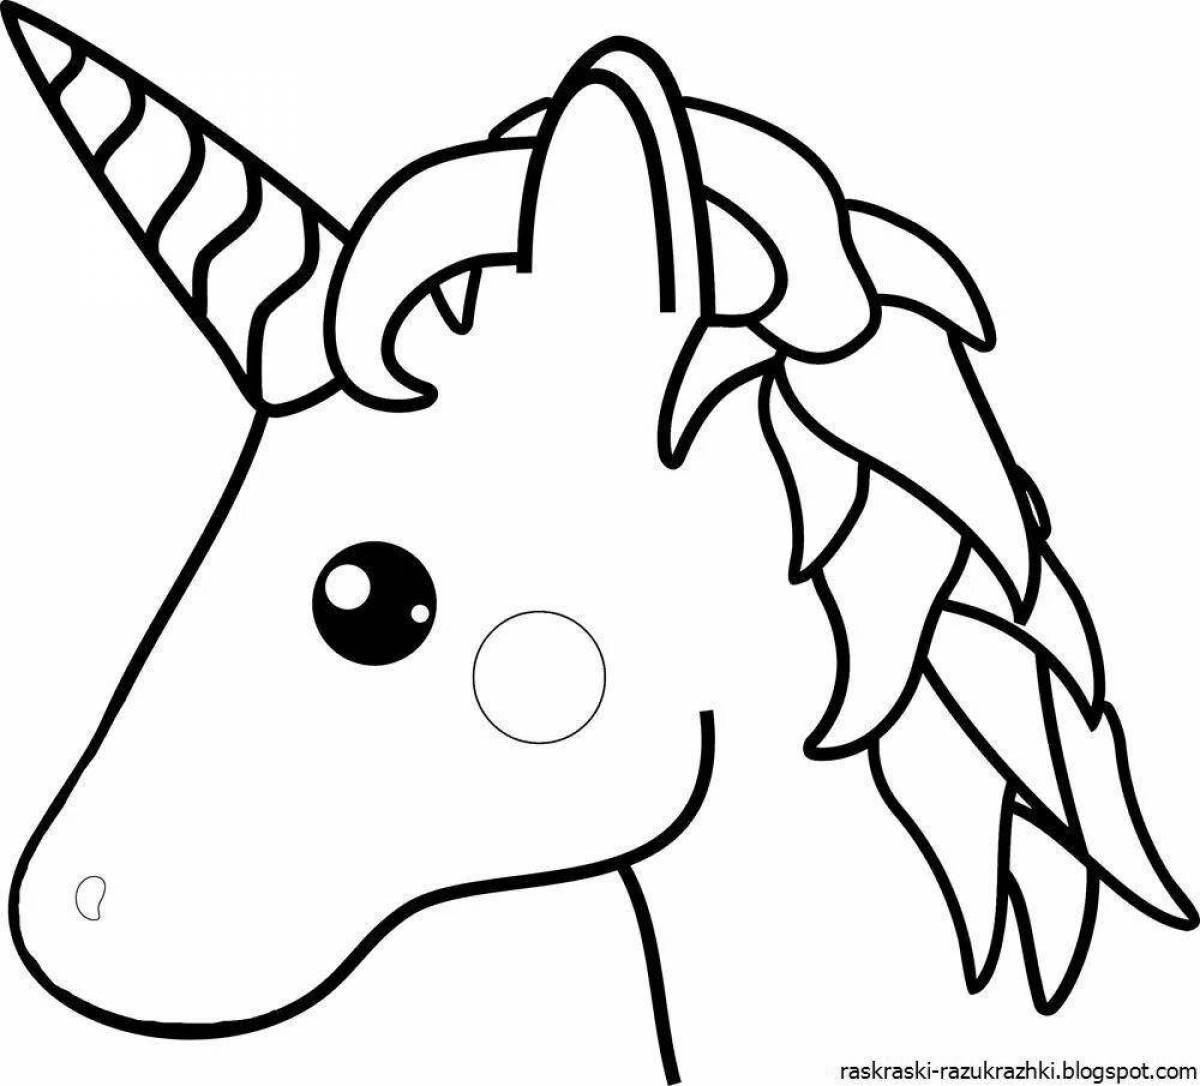 Great unicorn head coloring book